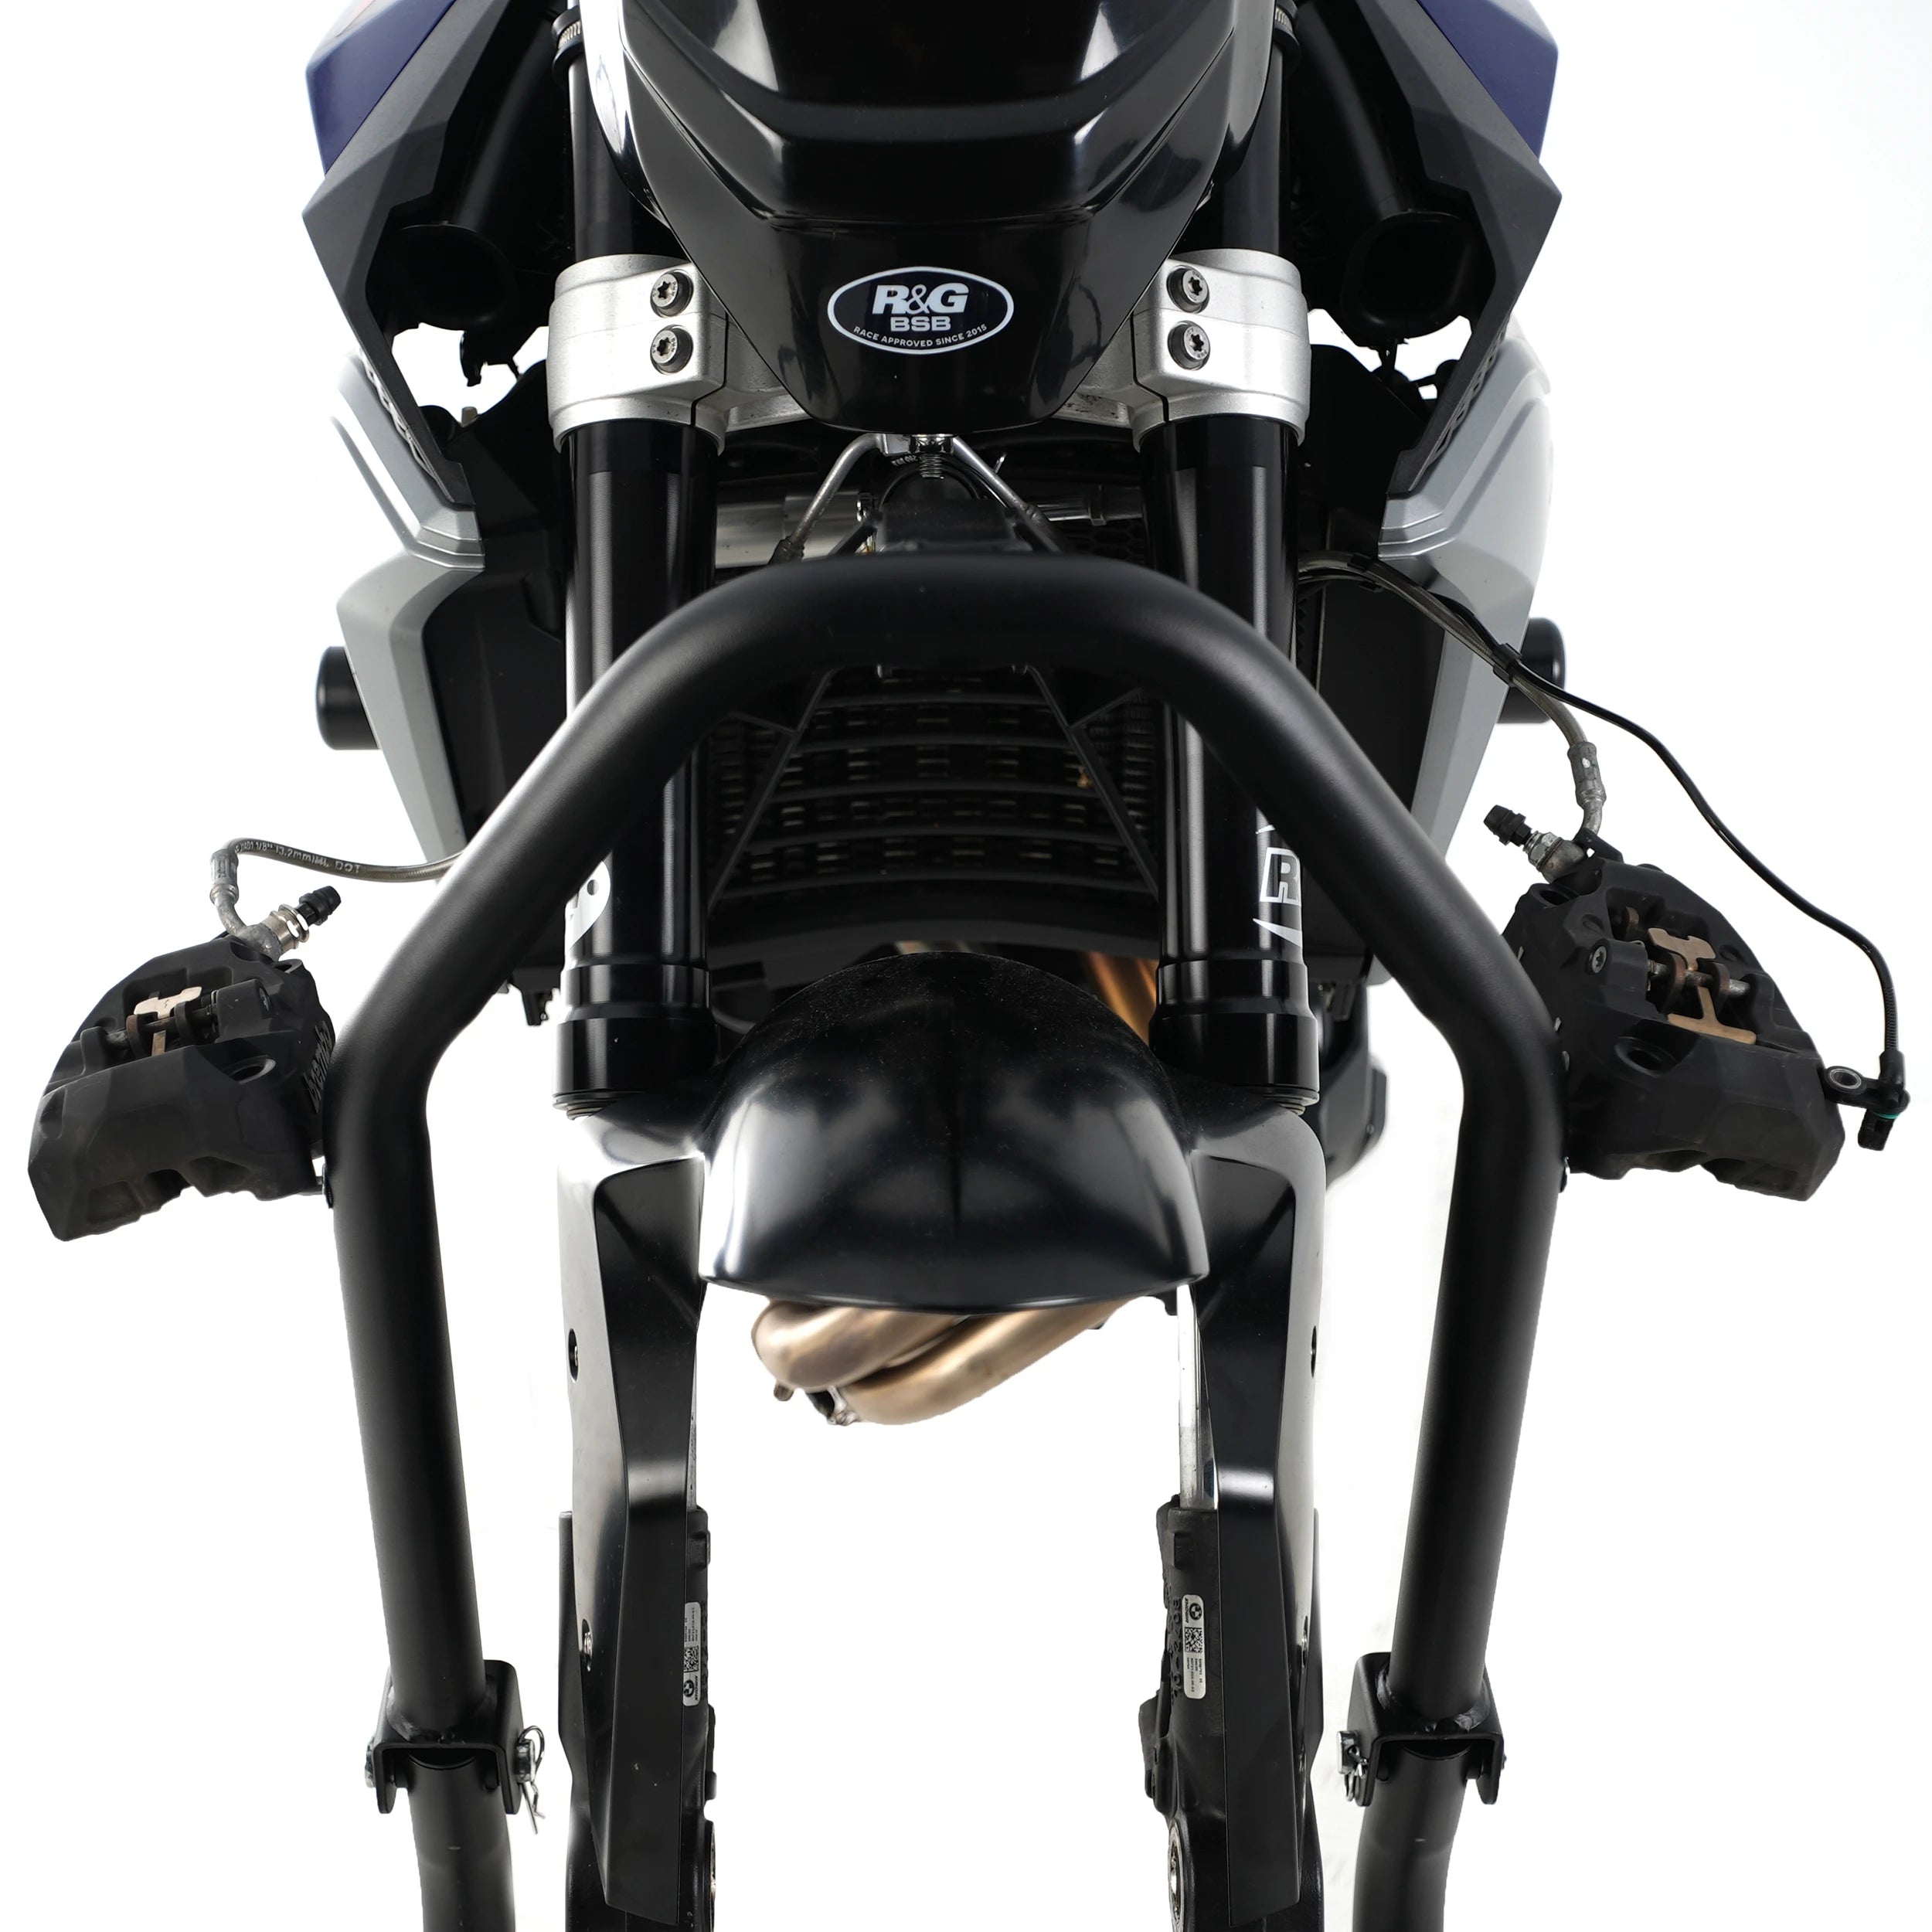 R&G Workshop Paddock Stand - Front Headlift-RWSPS/HEADLIFT-Bike Stands-Pyramid Motorcycle Accessories